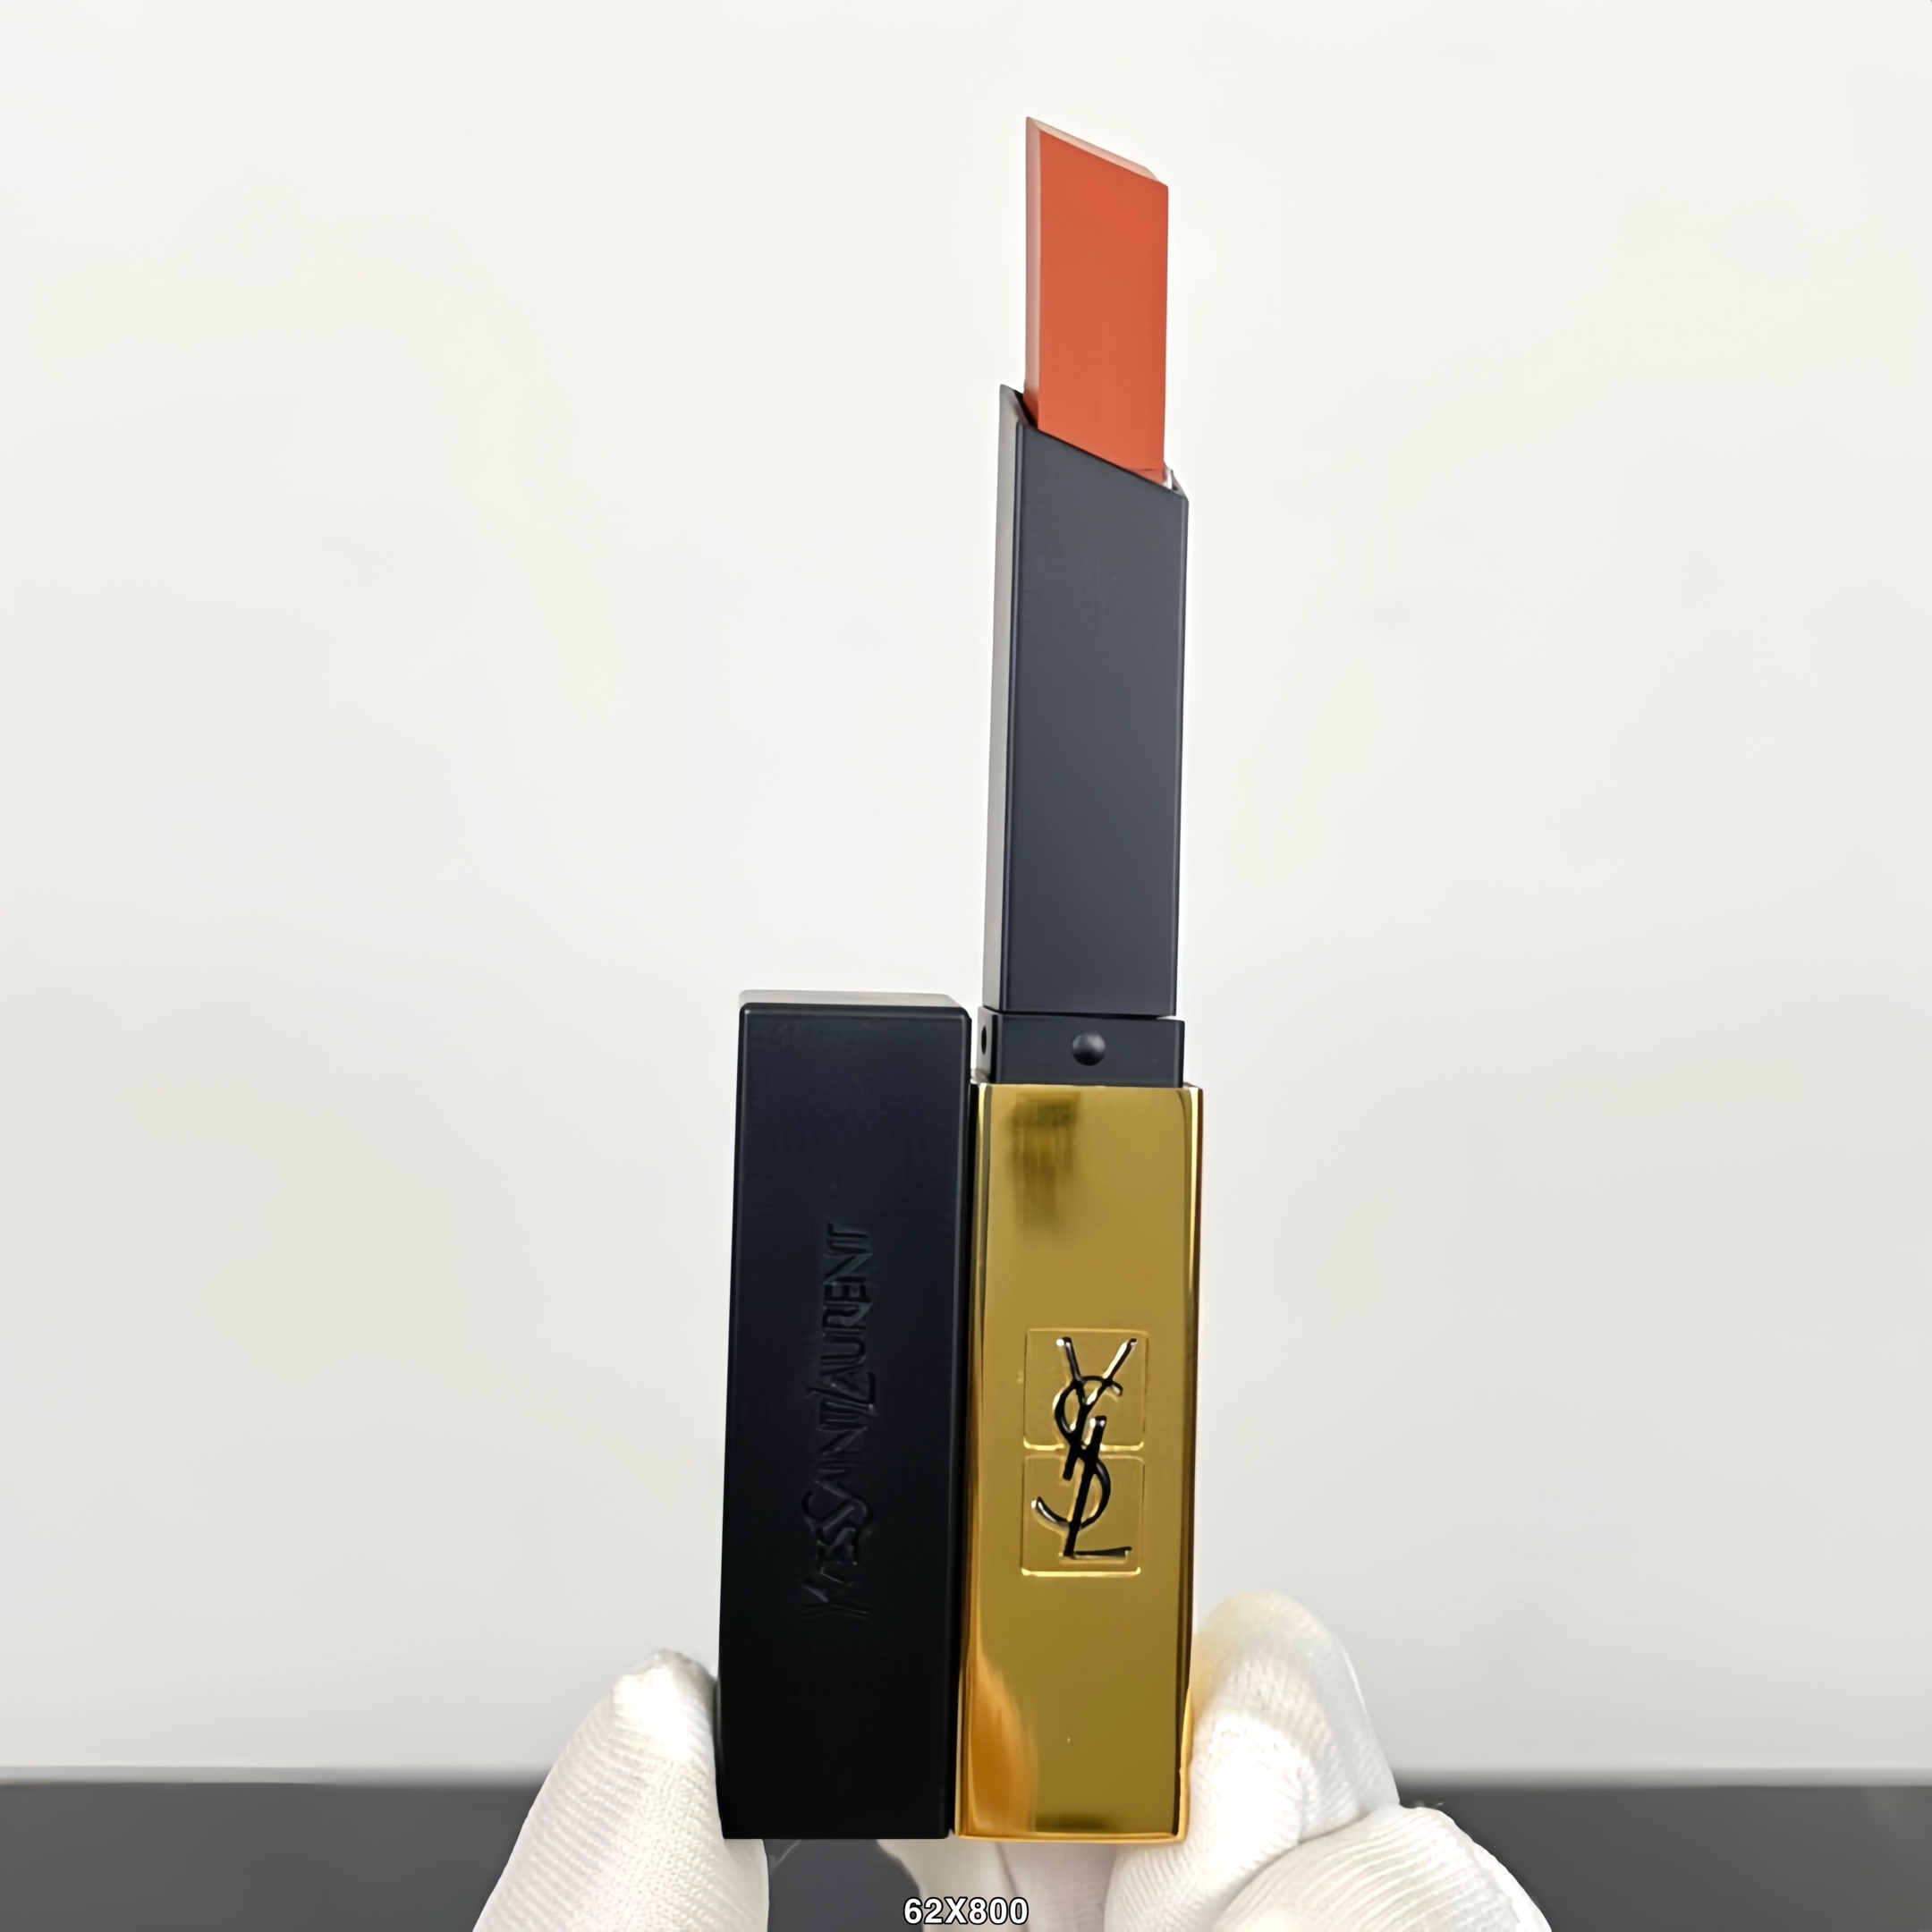 S style small gold bar lipstick